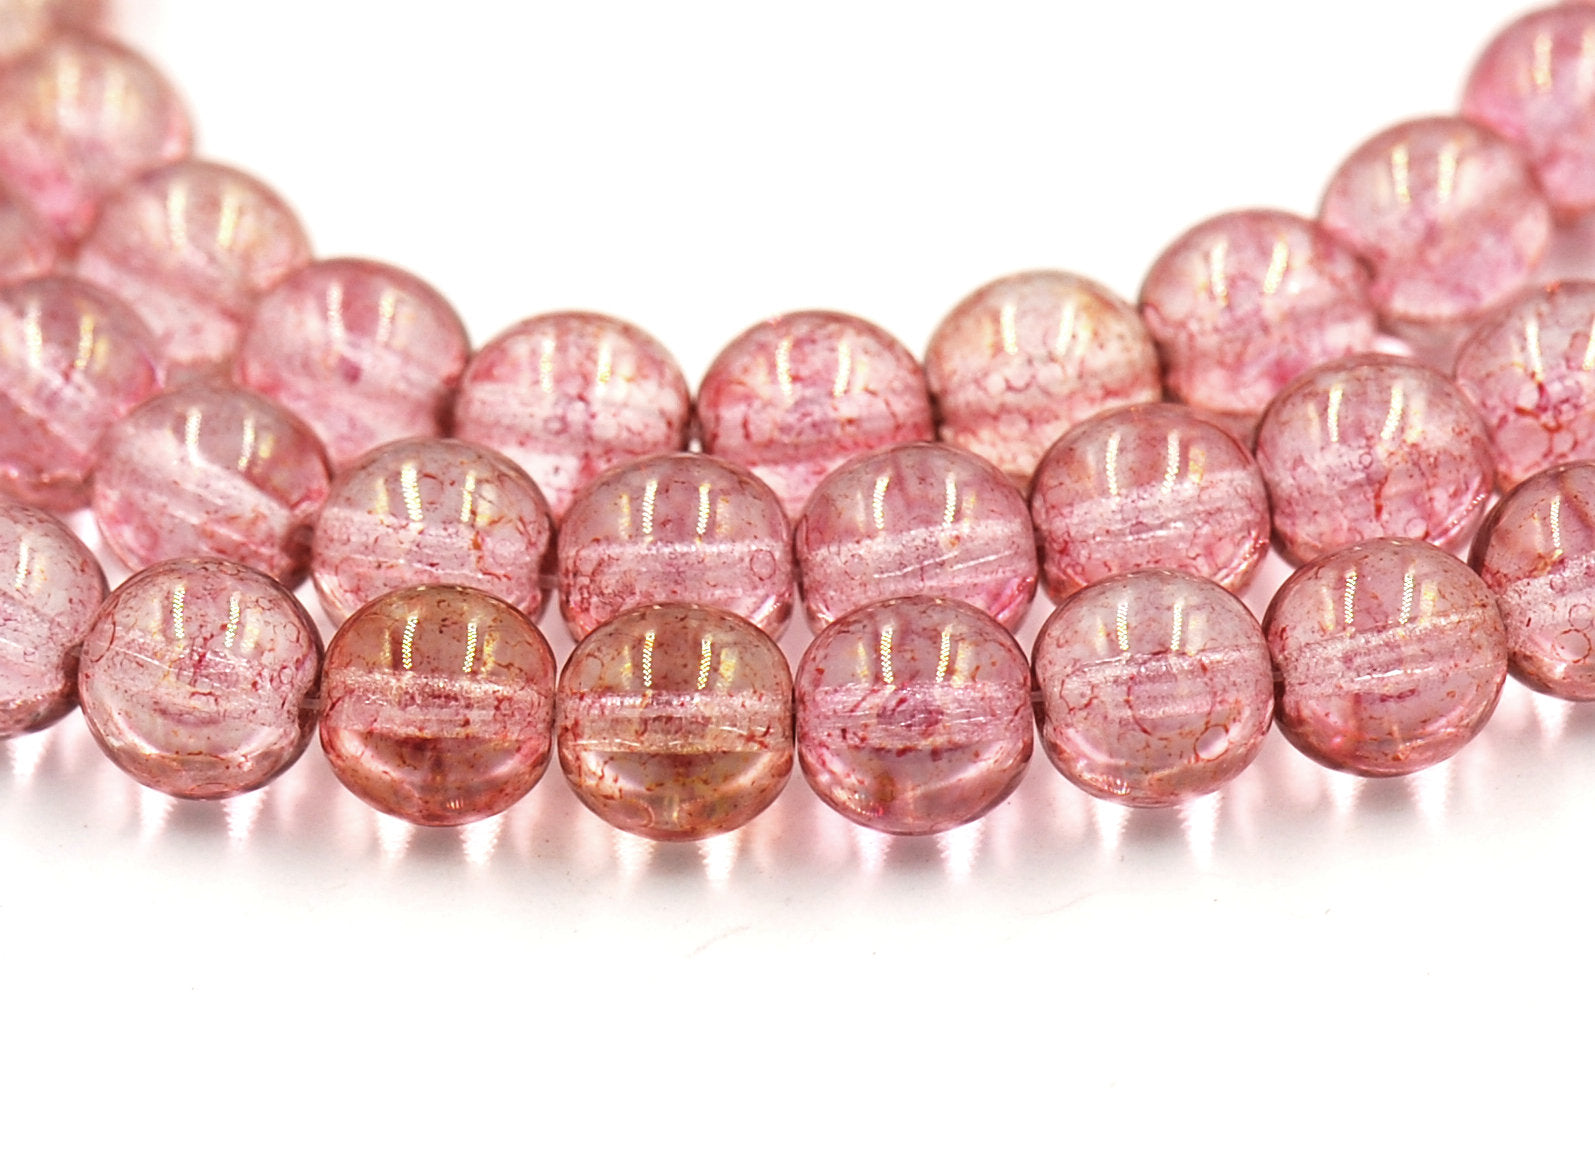 8mm Czech Glass Round Transparent Topaz/Pink Luster Beads  -25